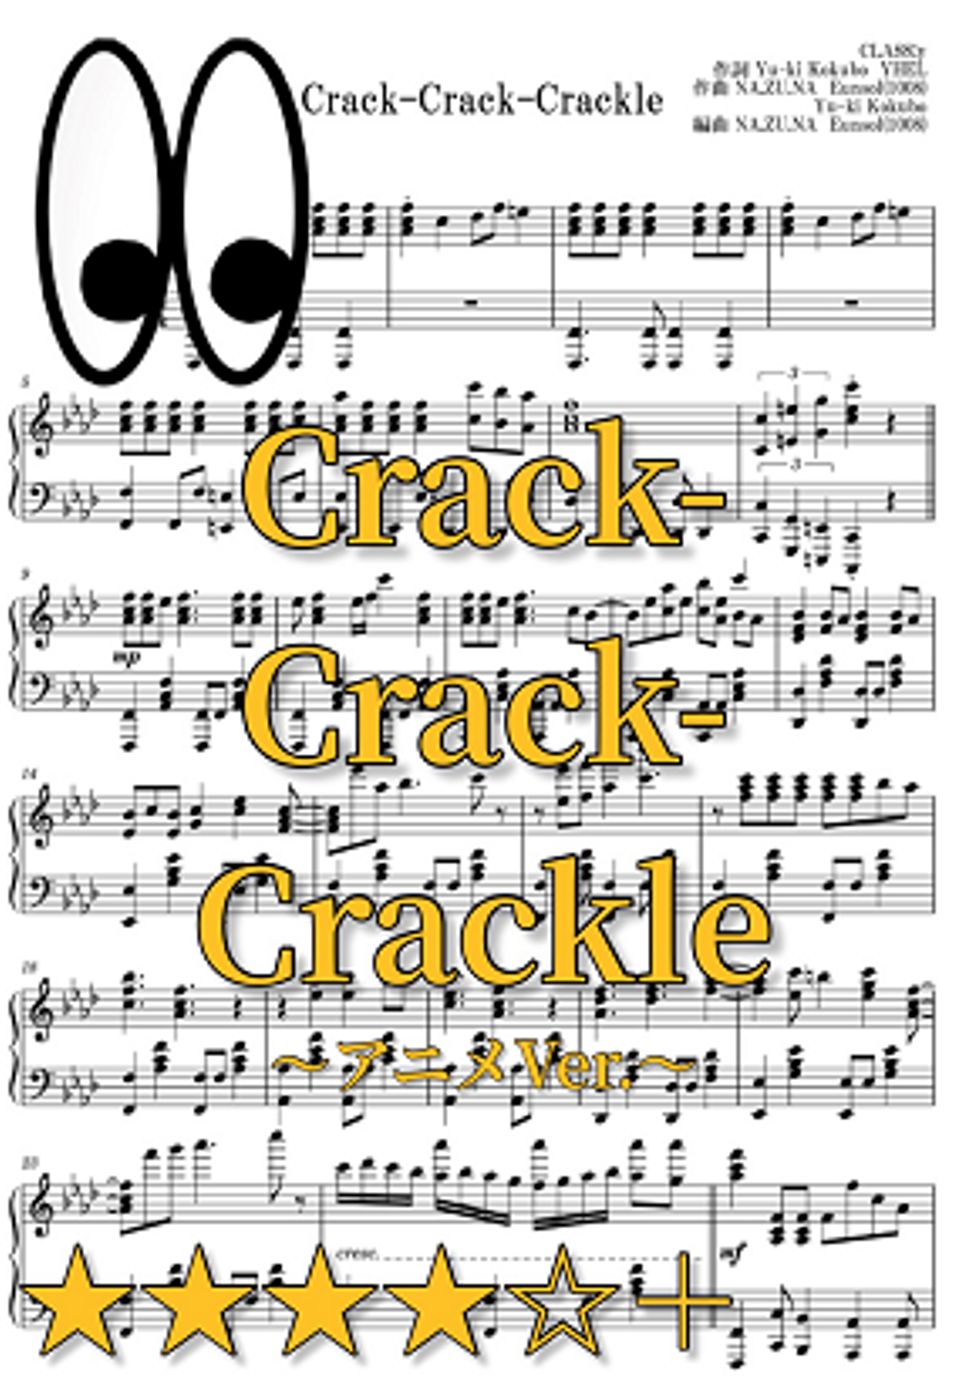 /CLASS:y - 【hard】Crack-Crack-Crackle/CLASS:y (ピアノ/アニメ/アニソン/アンデッドガールマーダーファルス/CLASS:y/Crack-Crack-Crackle/piano/anime) by uRuMI